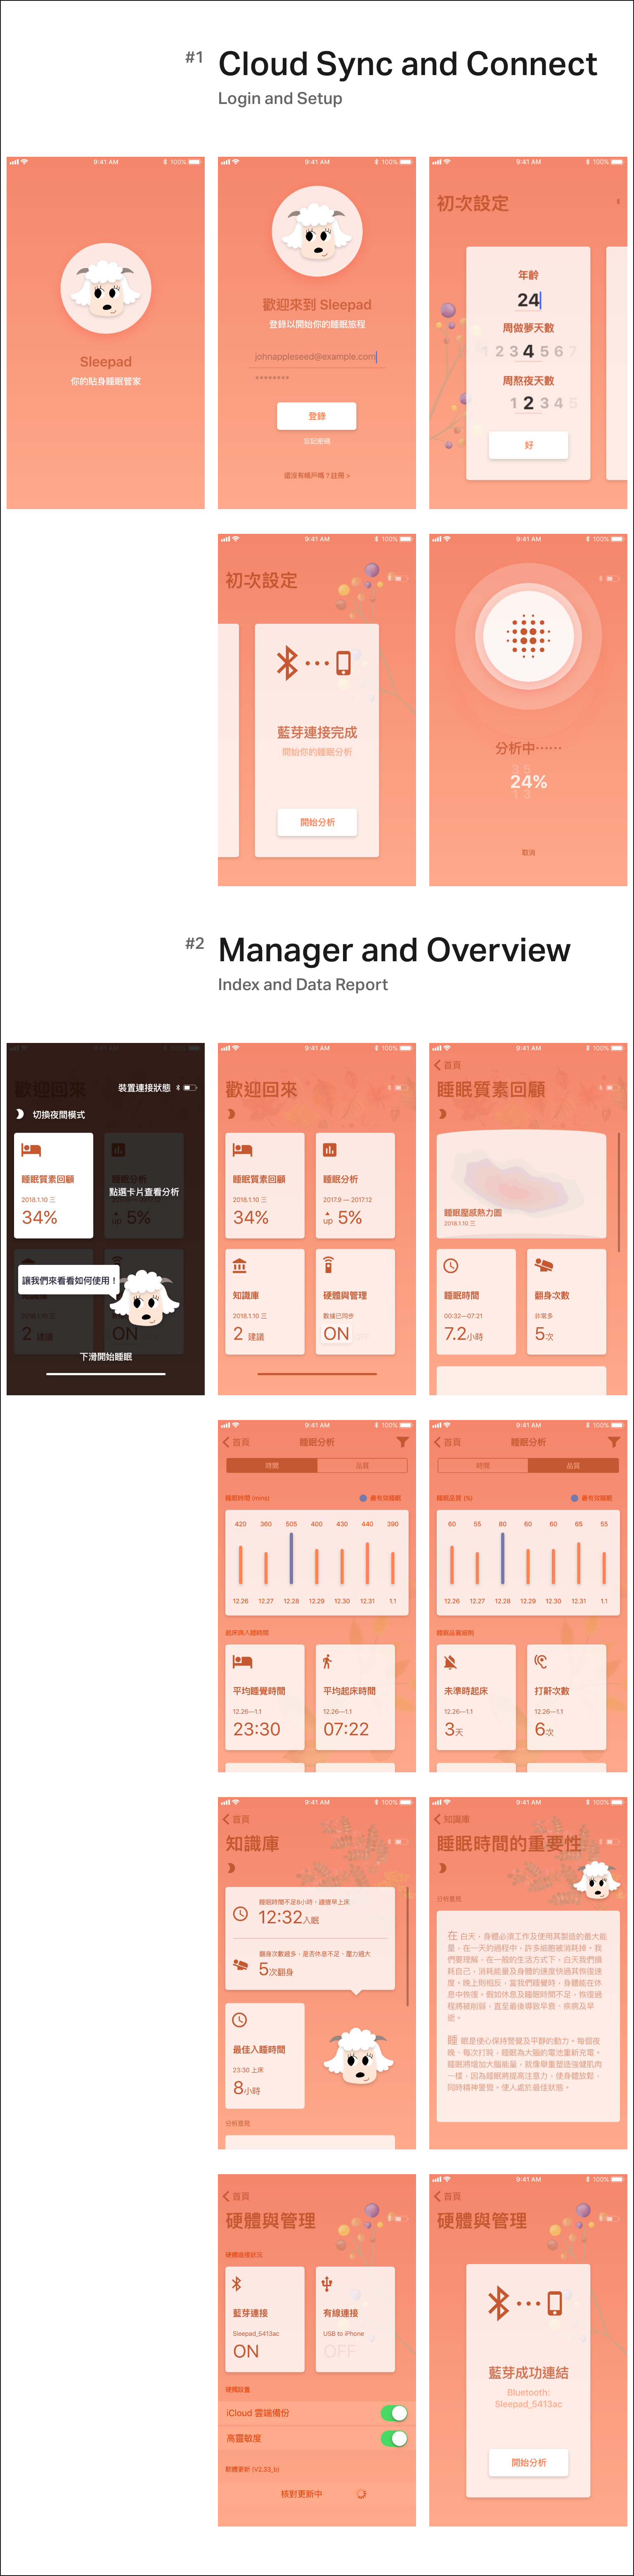 Login, setup, index and data report interfaces (light)